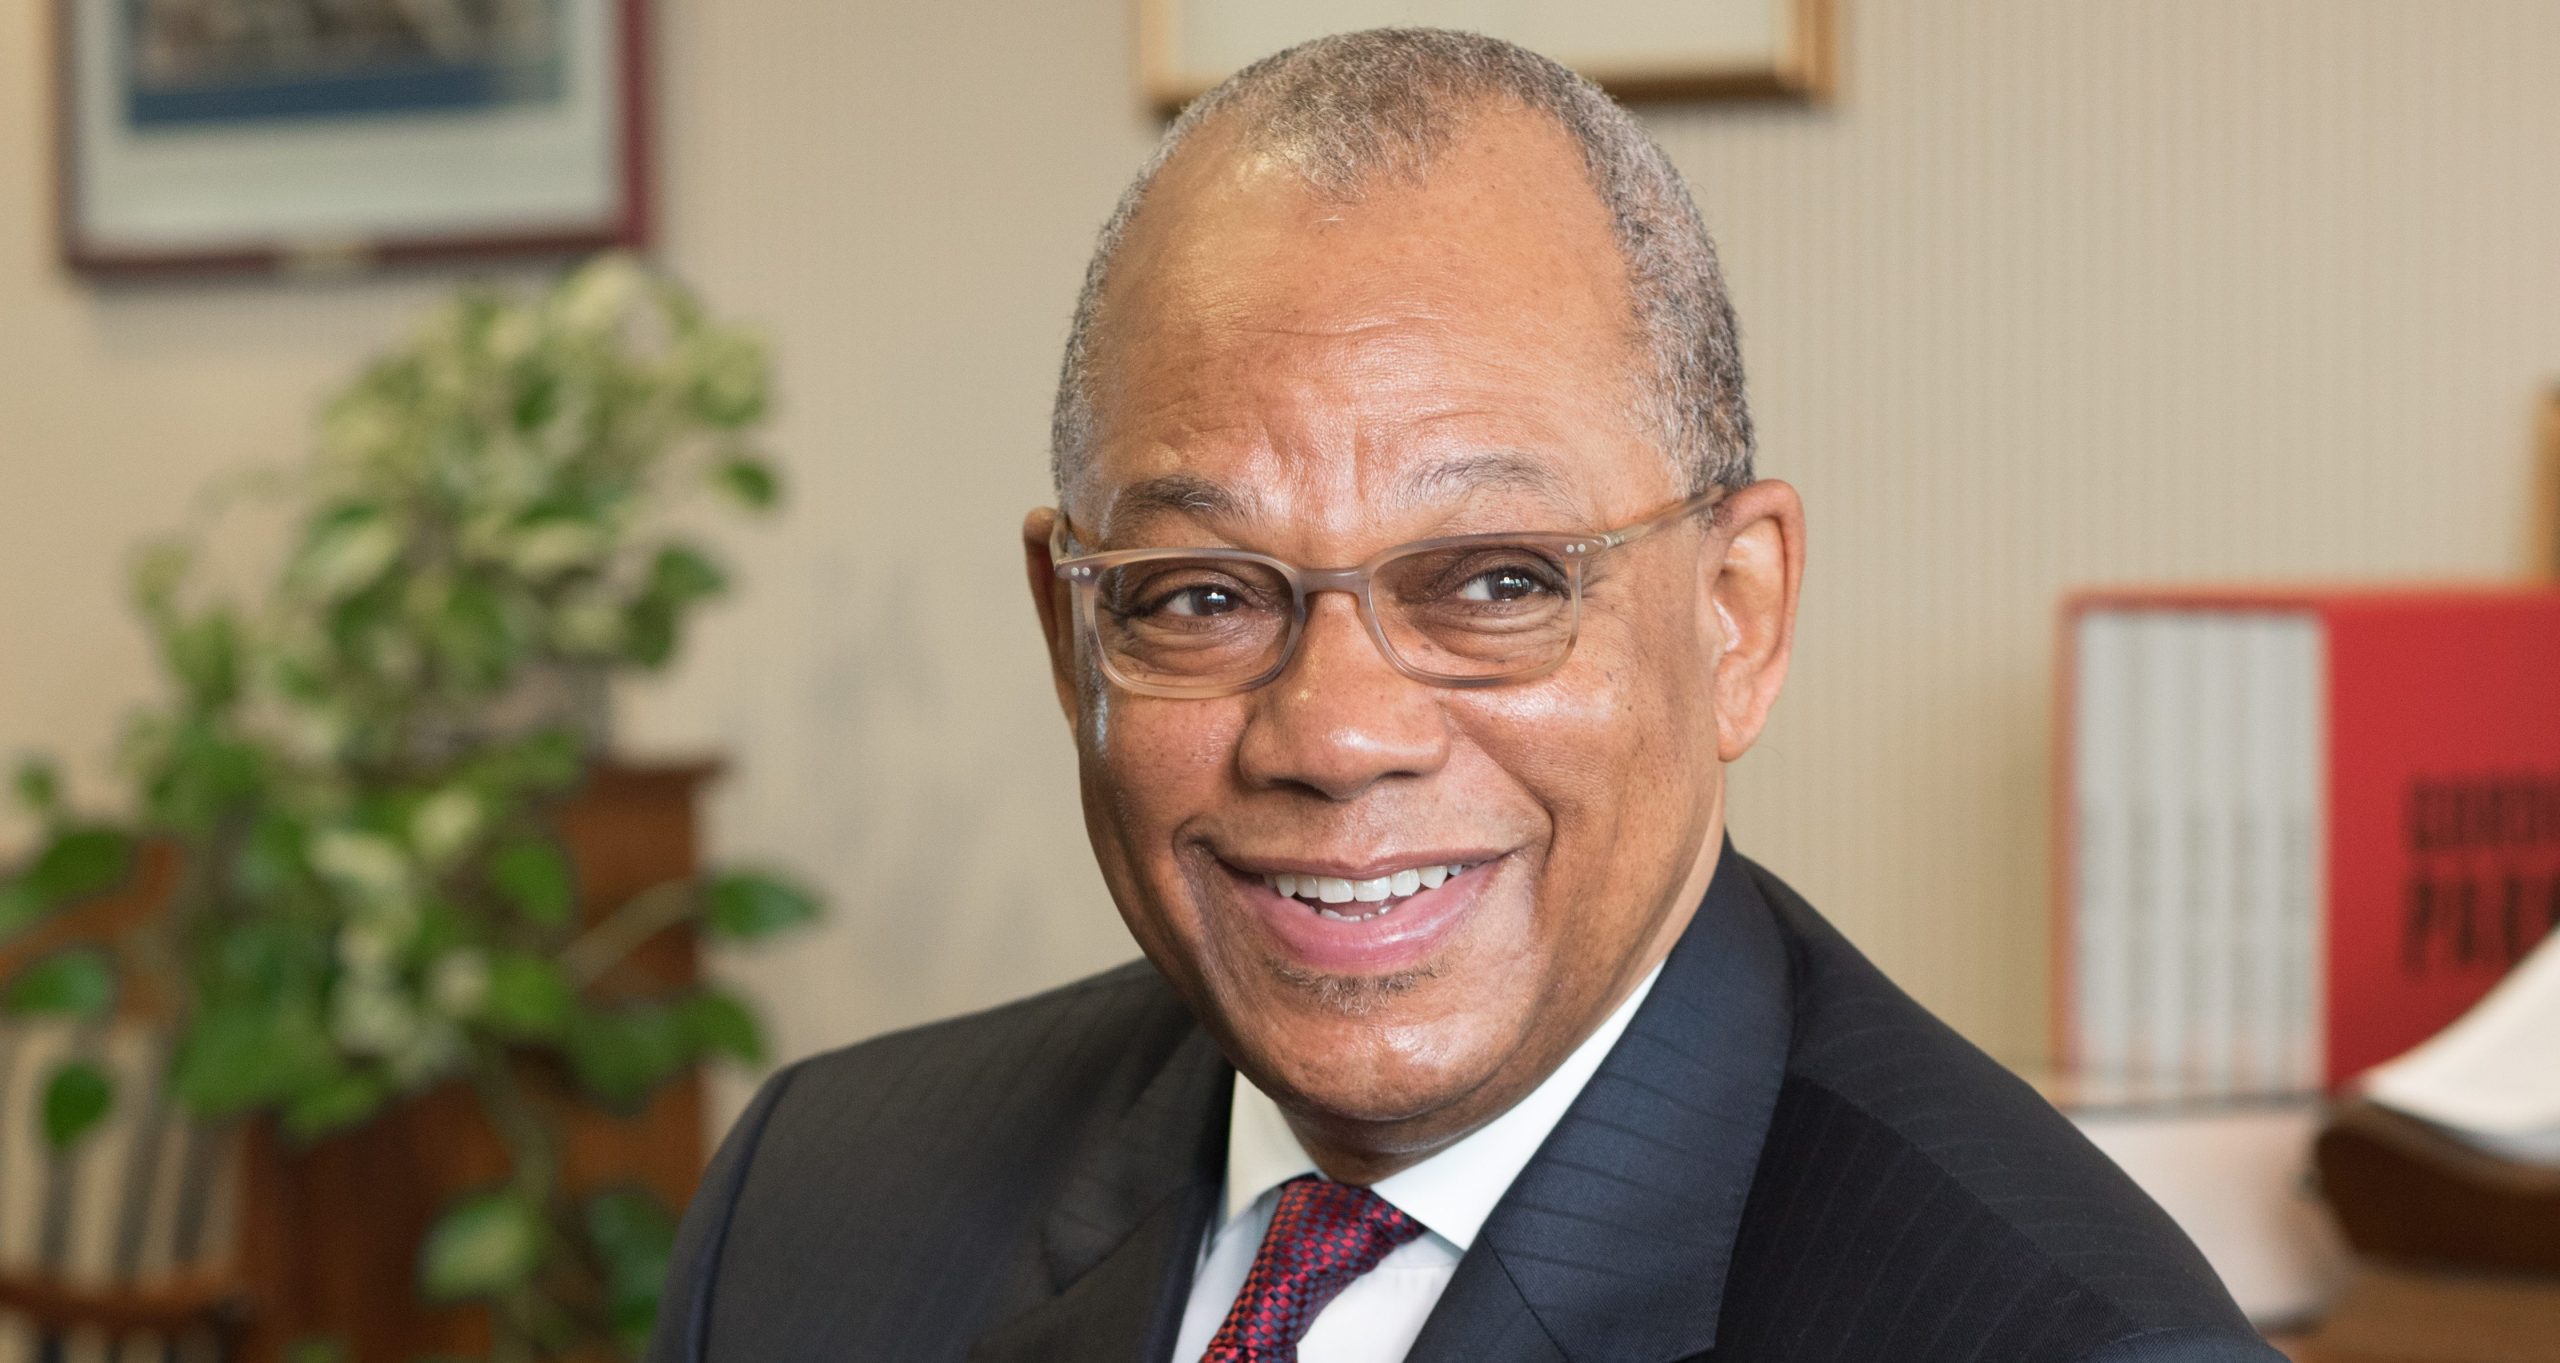 Rev. Calvin Butts, III, former SUNY Old Westbury president, dies at 73